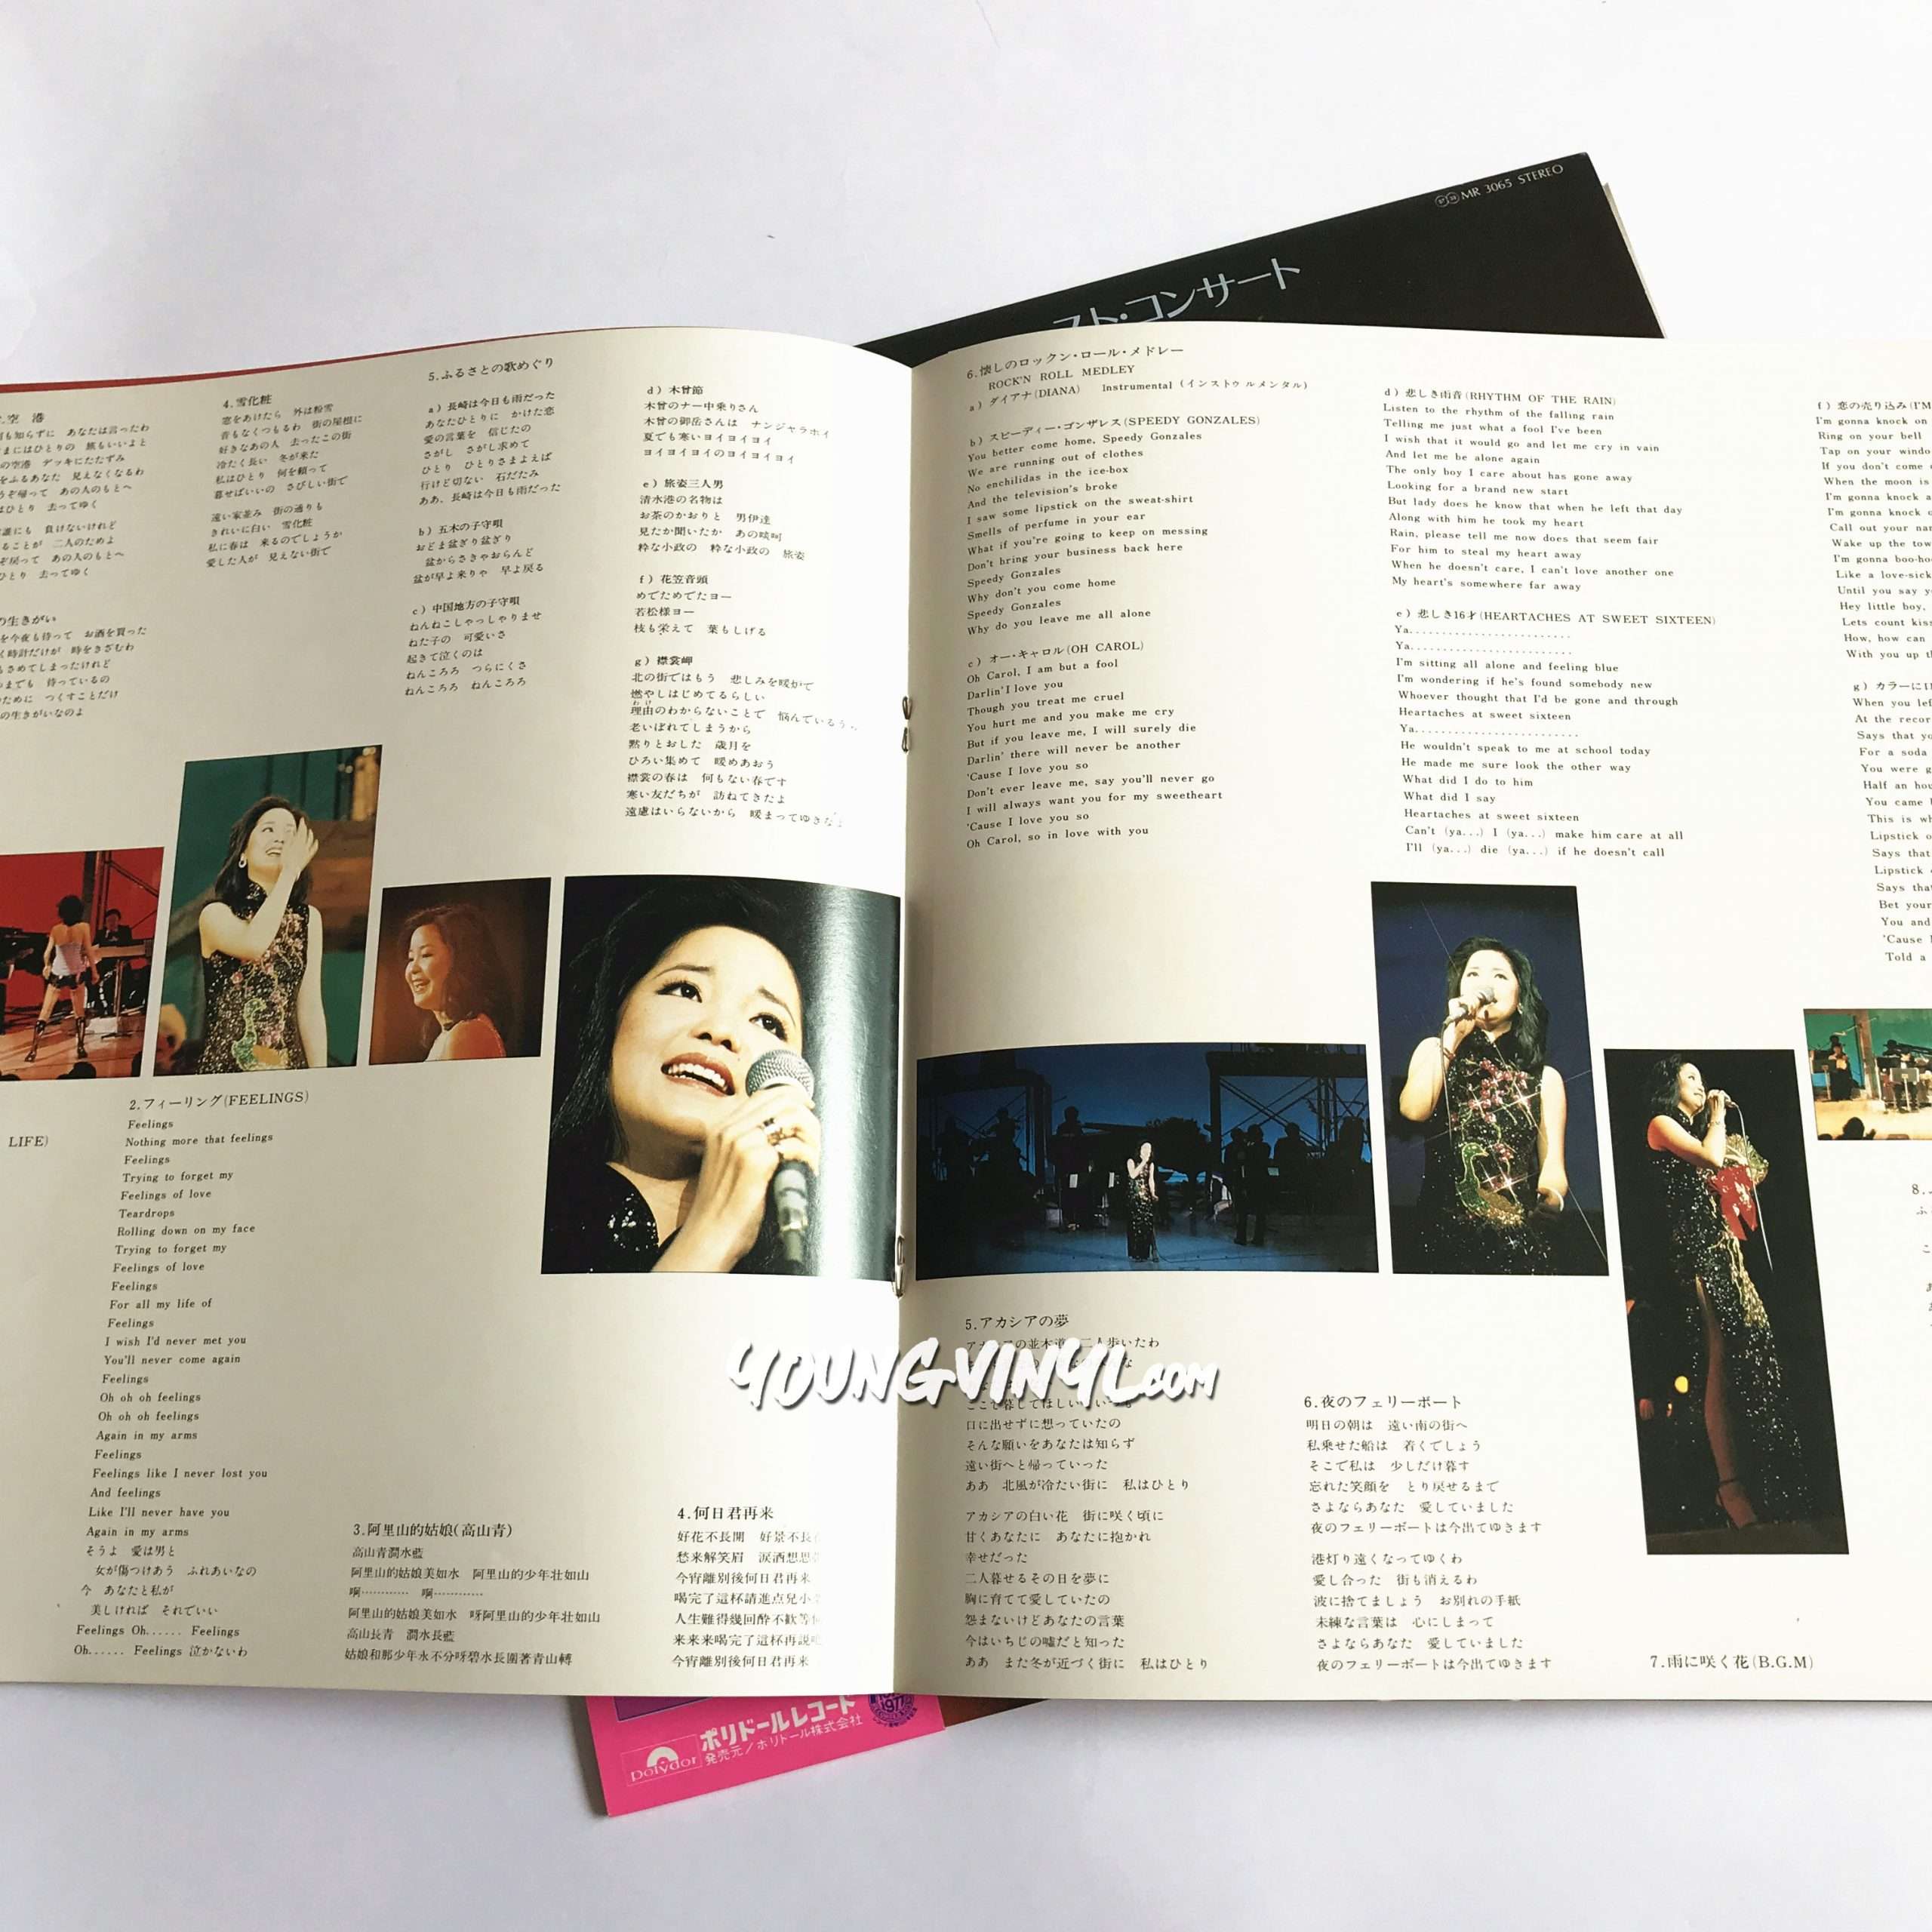 Teresa Teng First Concert Vinyl 鄧麗君 テレサ・テン ファースト